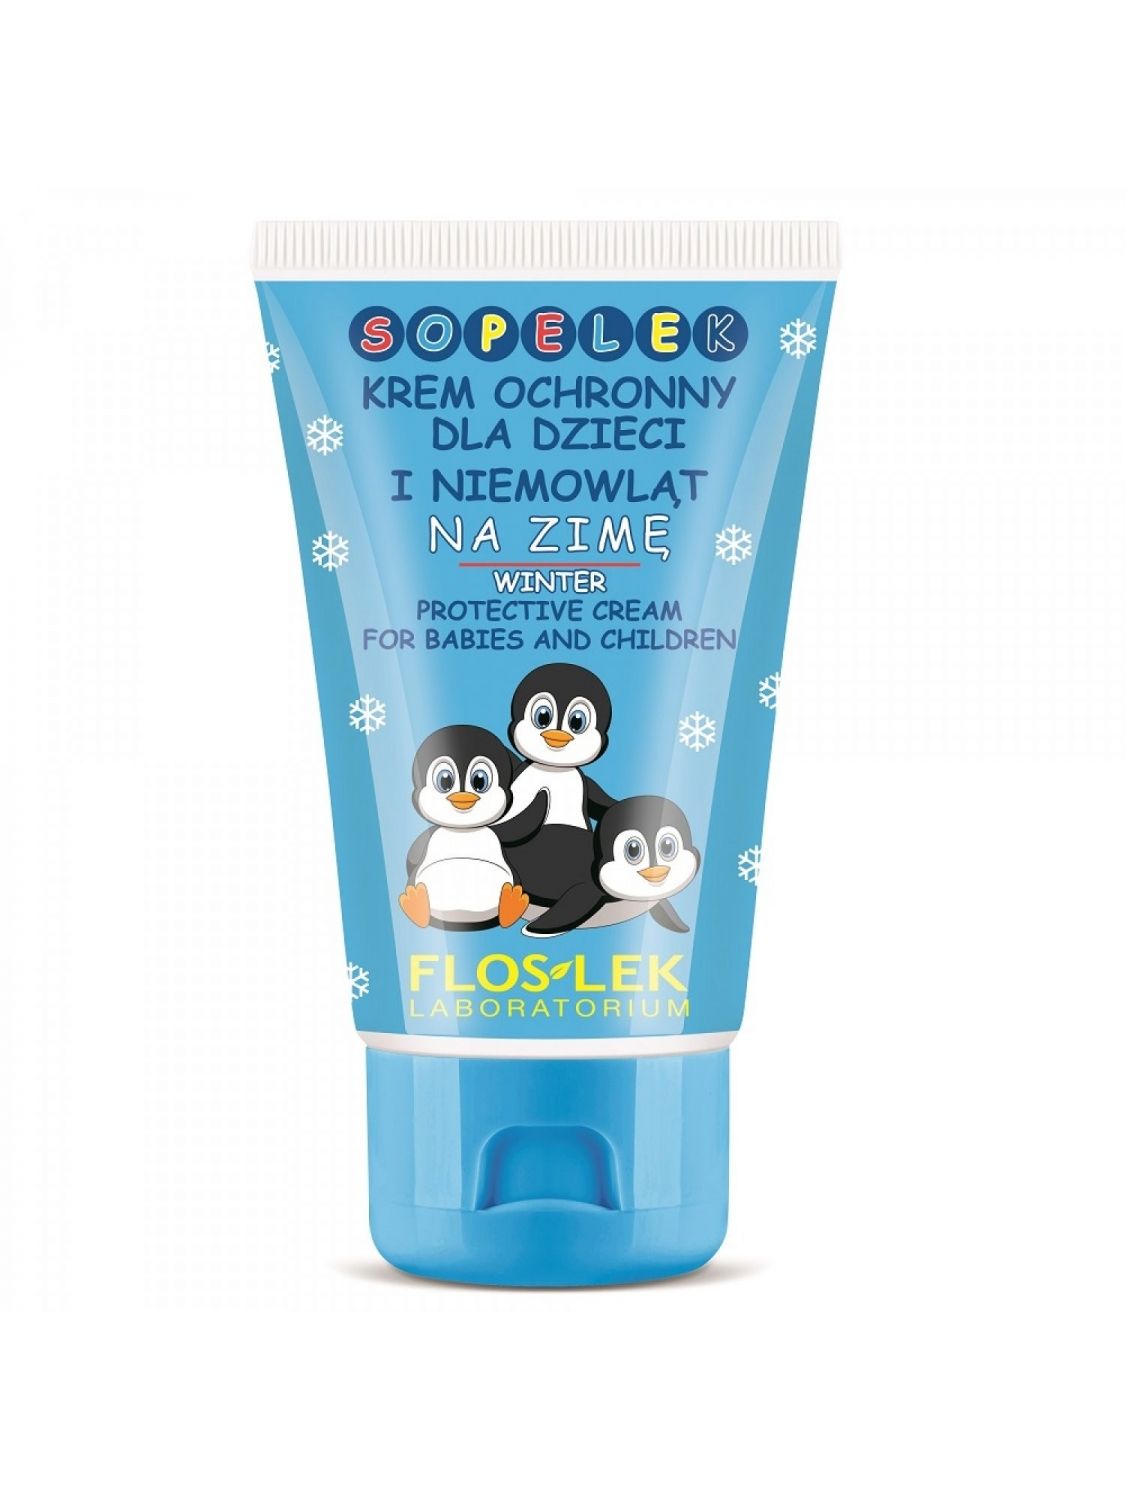 Floslek SOPELEK protective cream for children and babies for winter